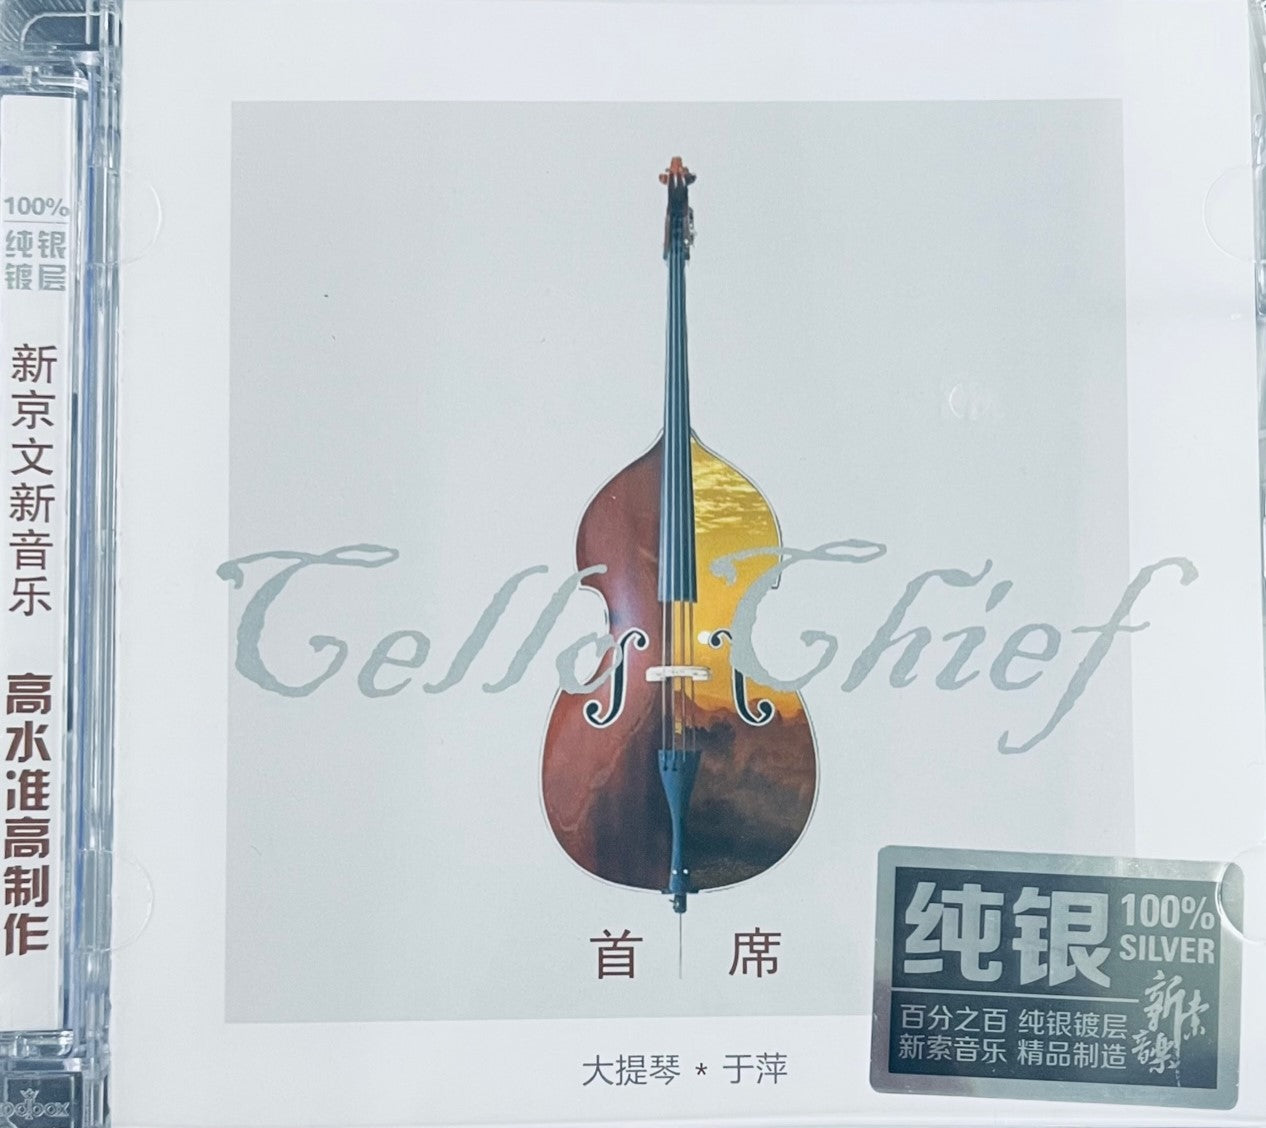 CELLOS CHIEF - 首席大提琴  于萍  (SILVER CD)